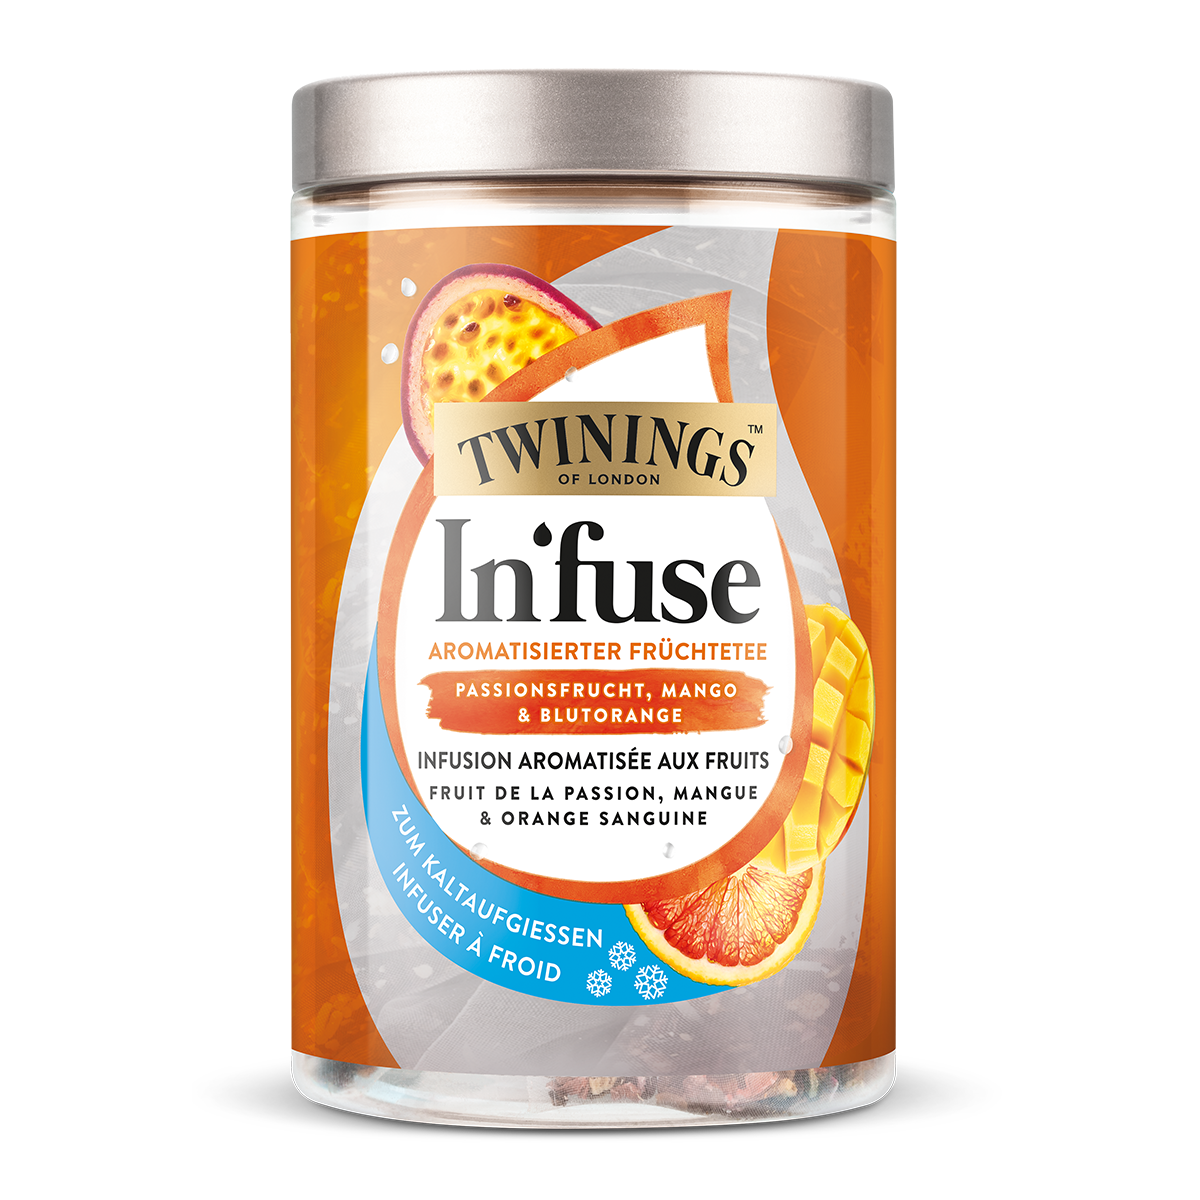  Twinings In’fuse Fruit de la passion, Mangue & Orange sanguine